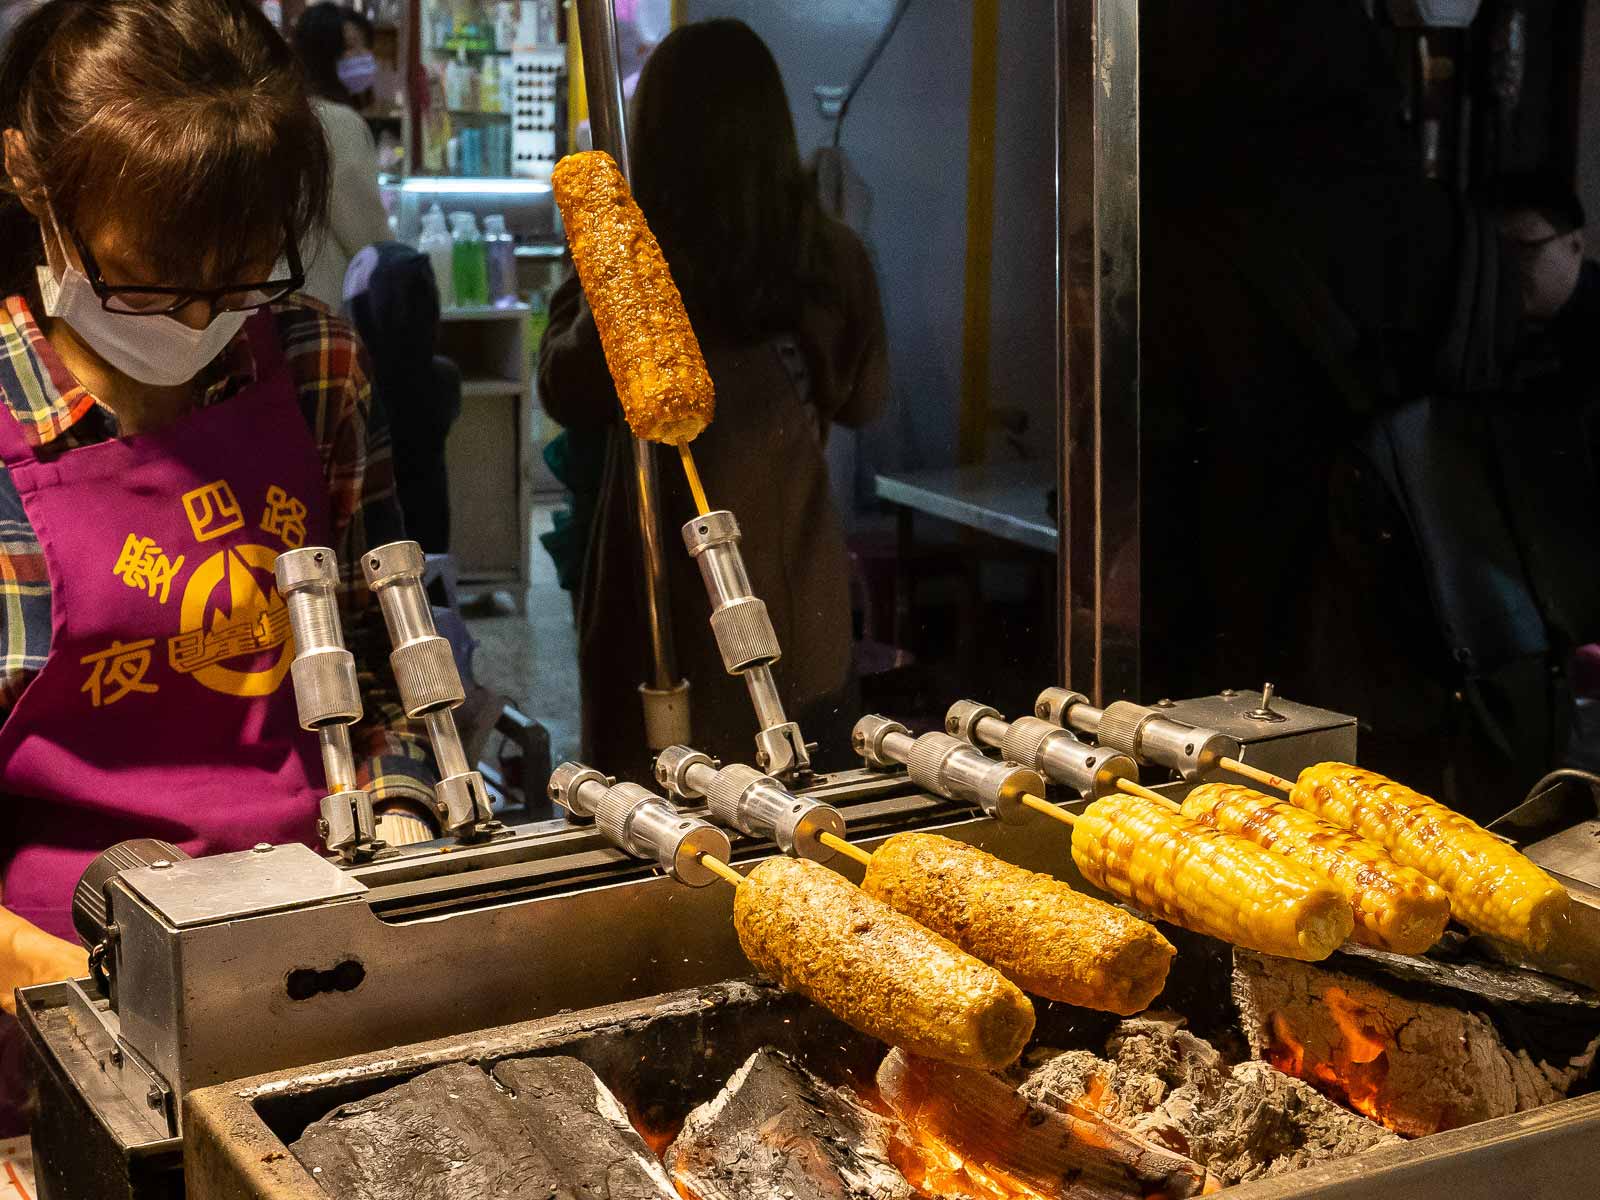 A stall sells roasted sweet corn.